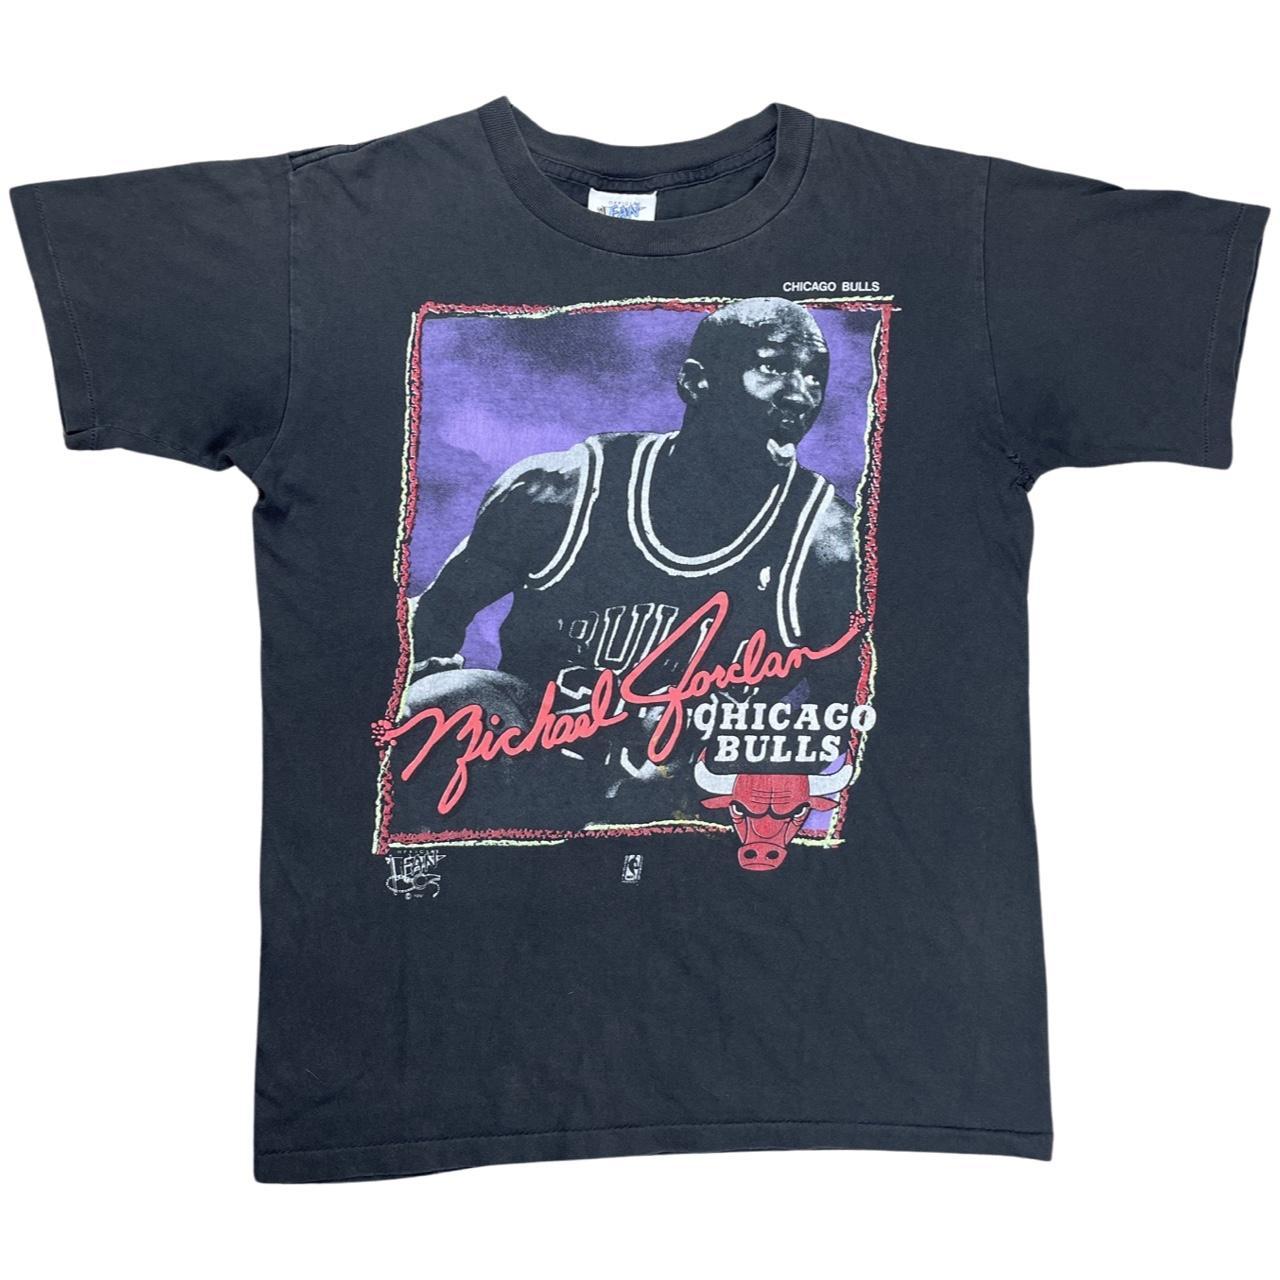 Vintage 90s Michael Jordan Chicago Bulls T-Shirt